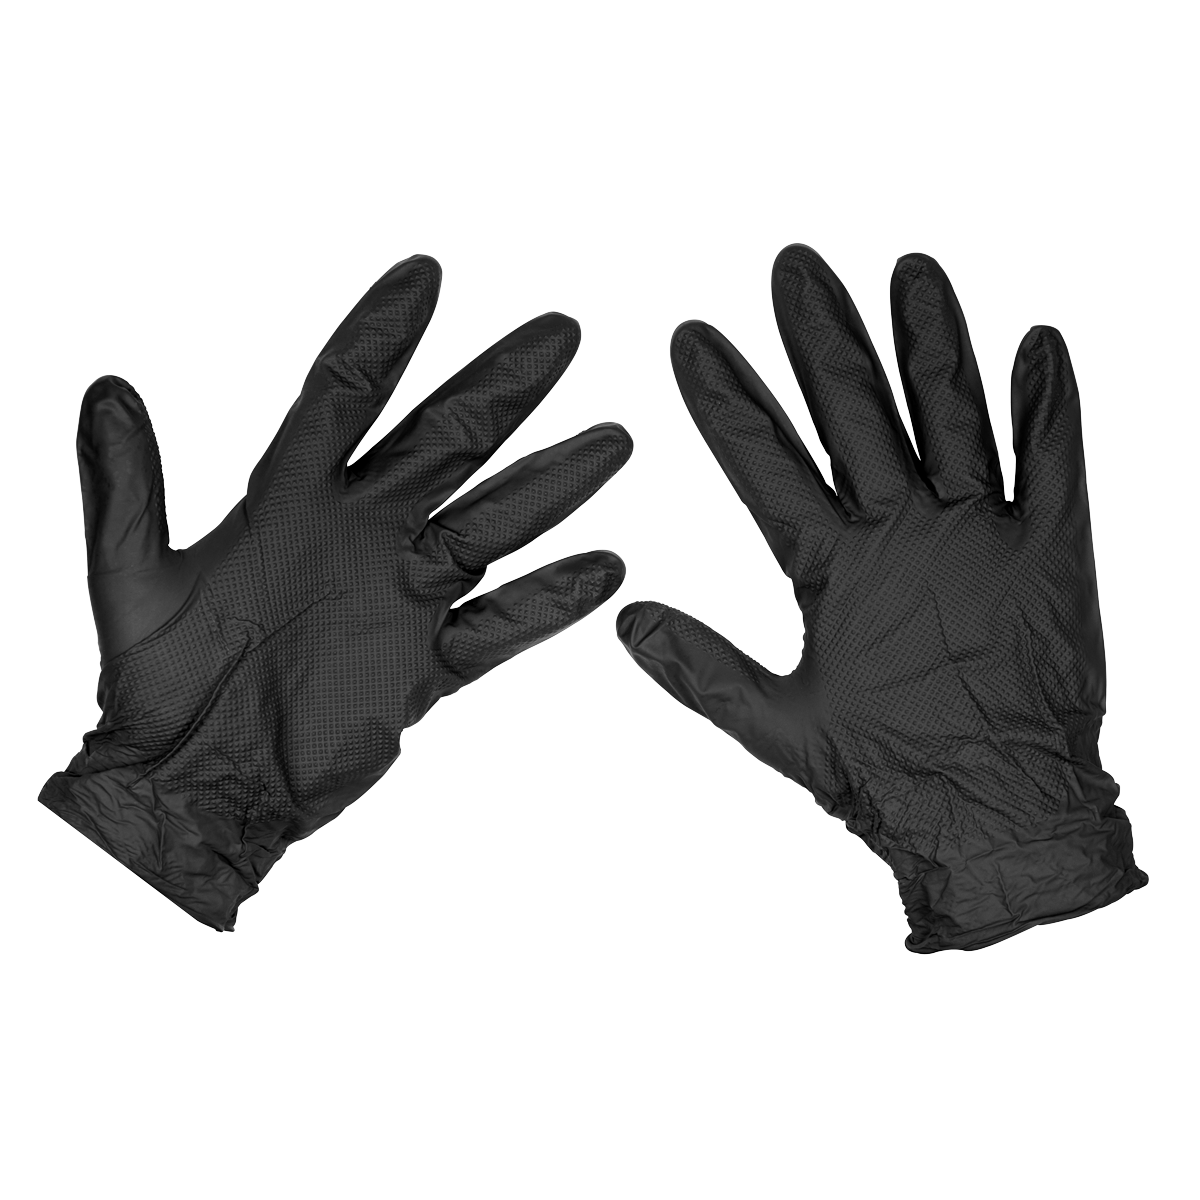 Black Diamond Grip Extra-Thick Nitrile Powder-Free Gloves - Pack of 50